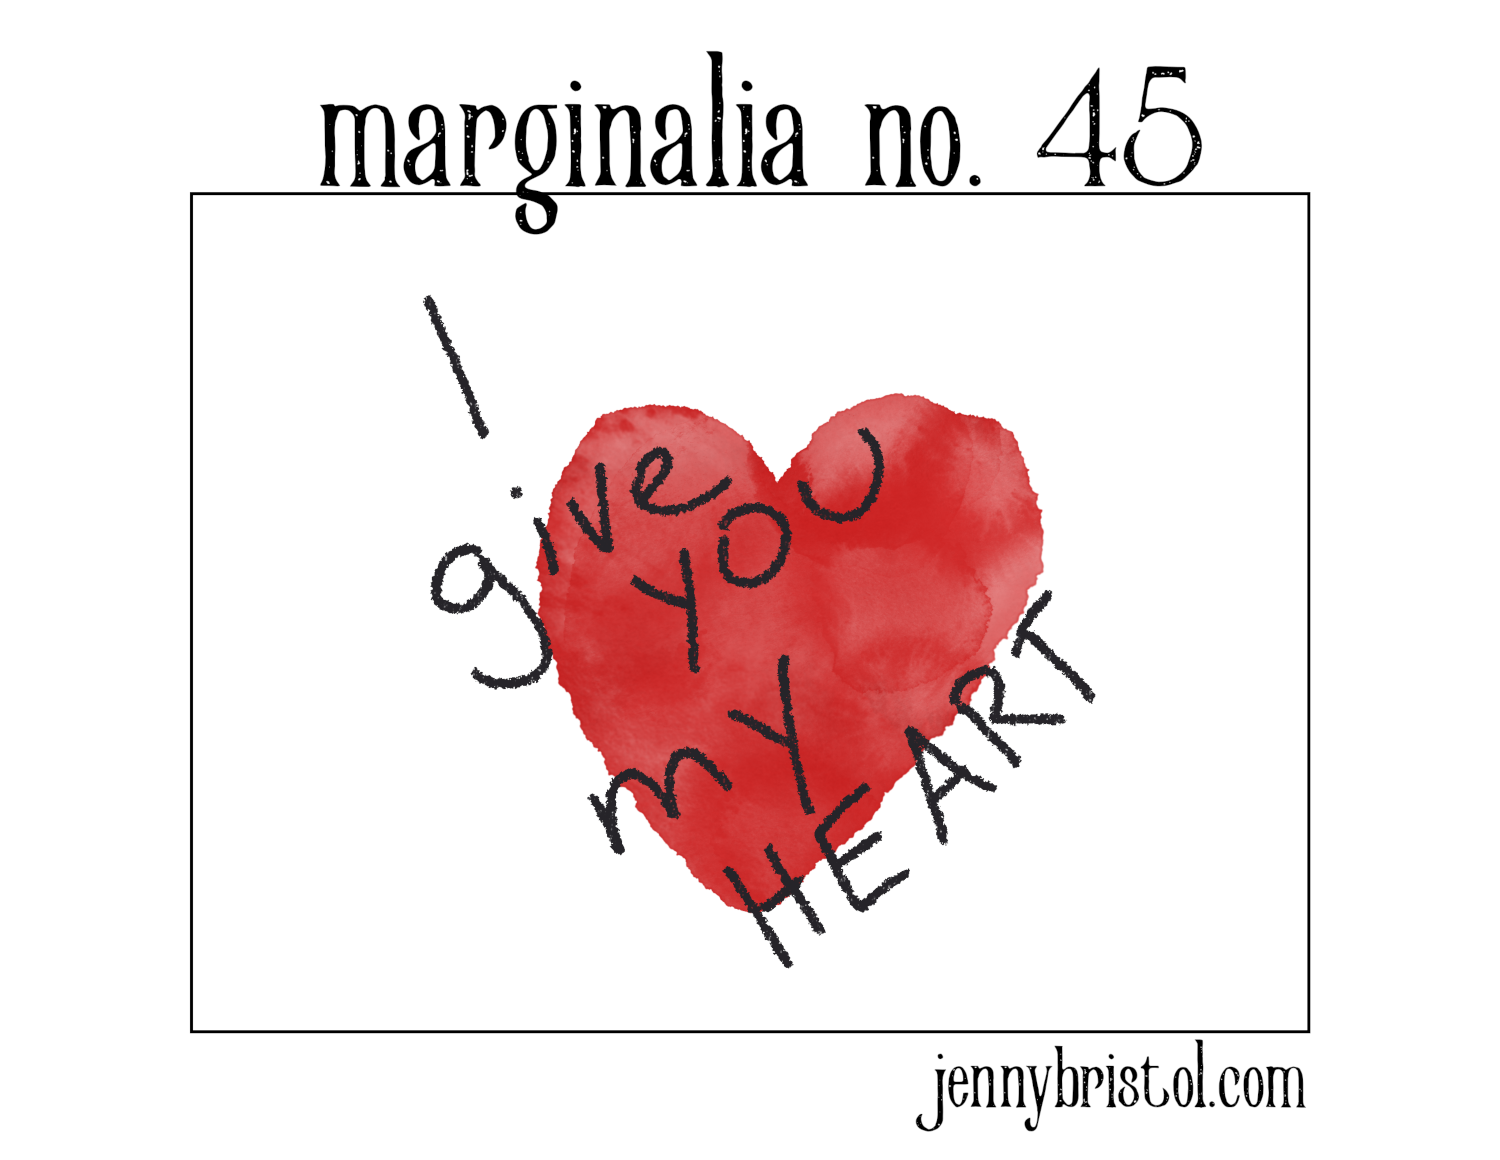 Marginalia no. 45 to post